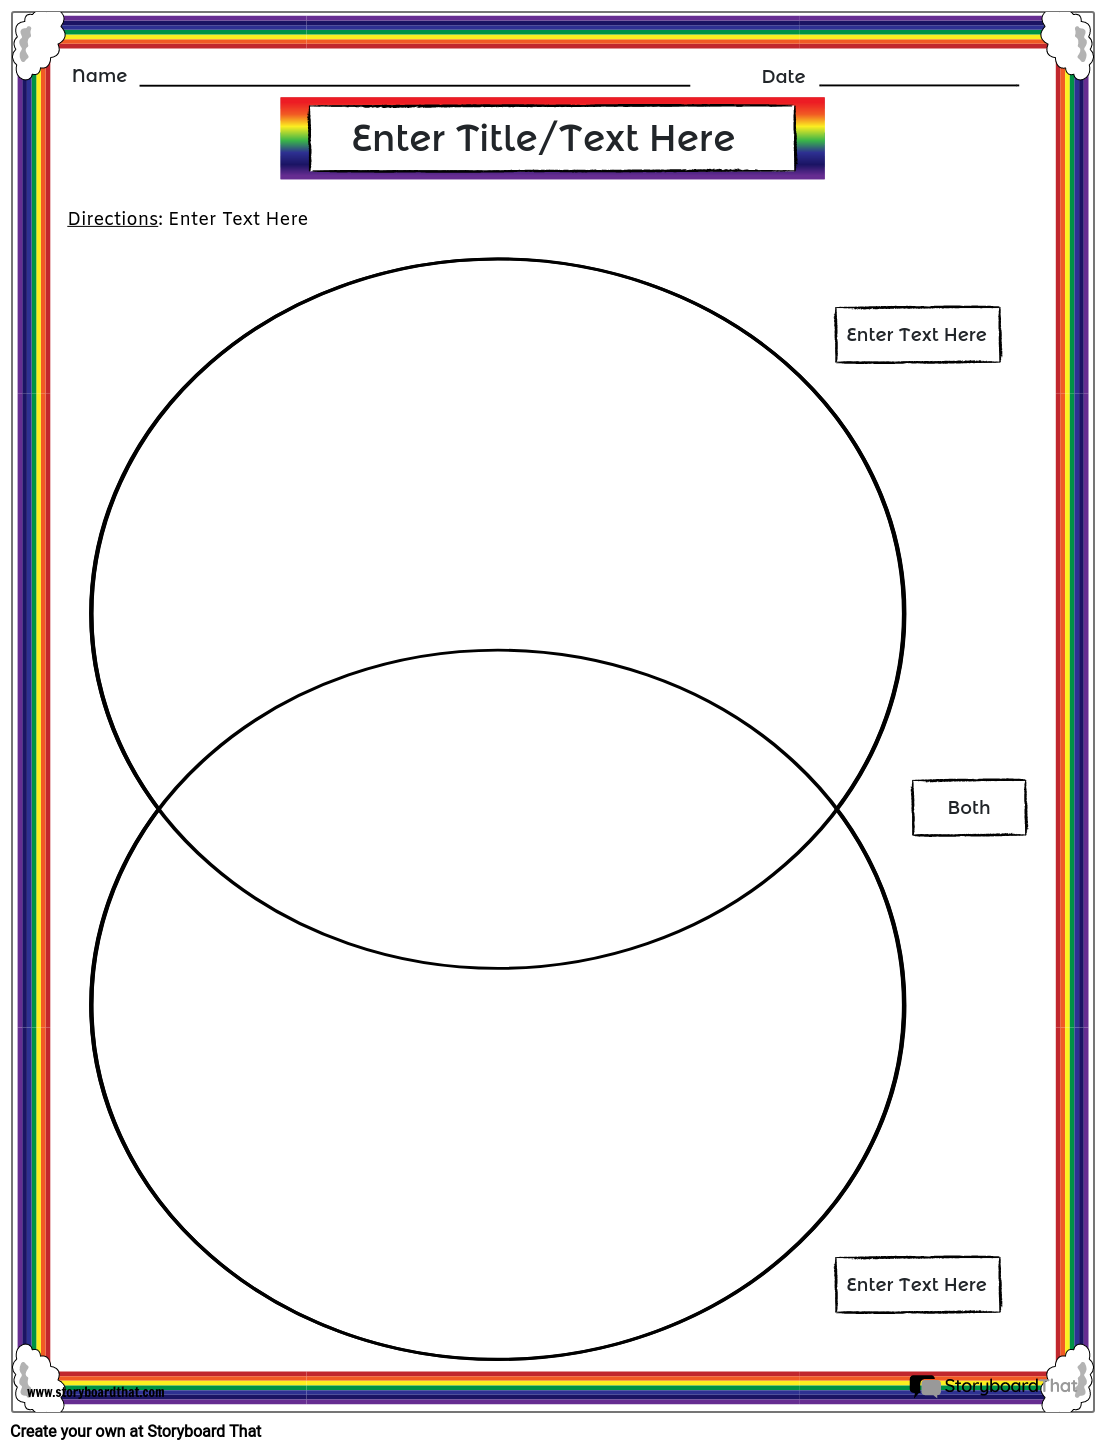 Free Venn Diagram Maker: Printable, Customizable Examples